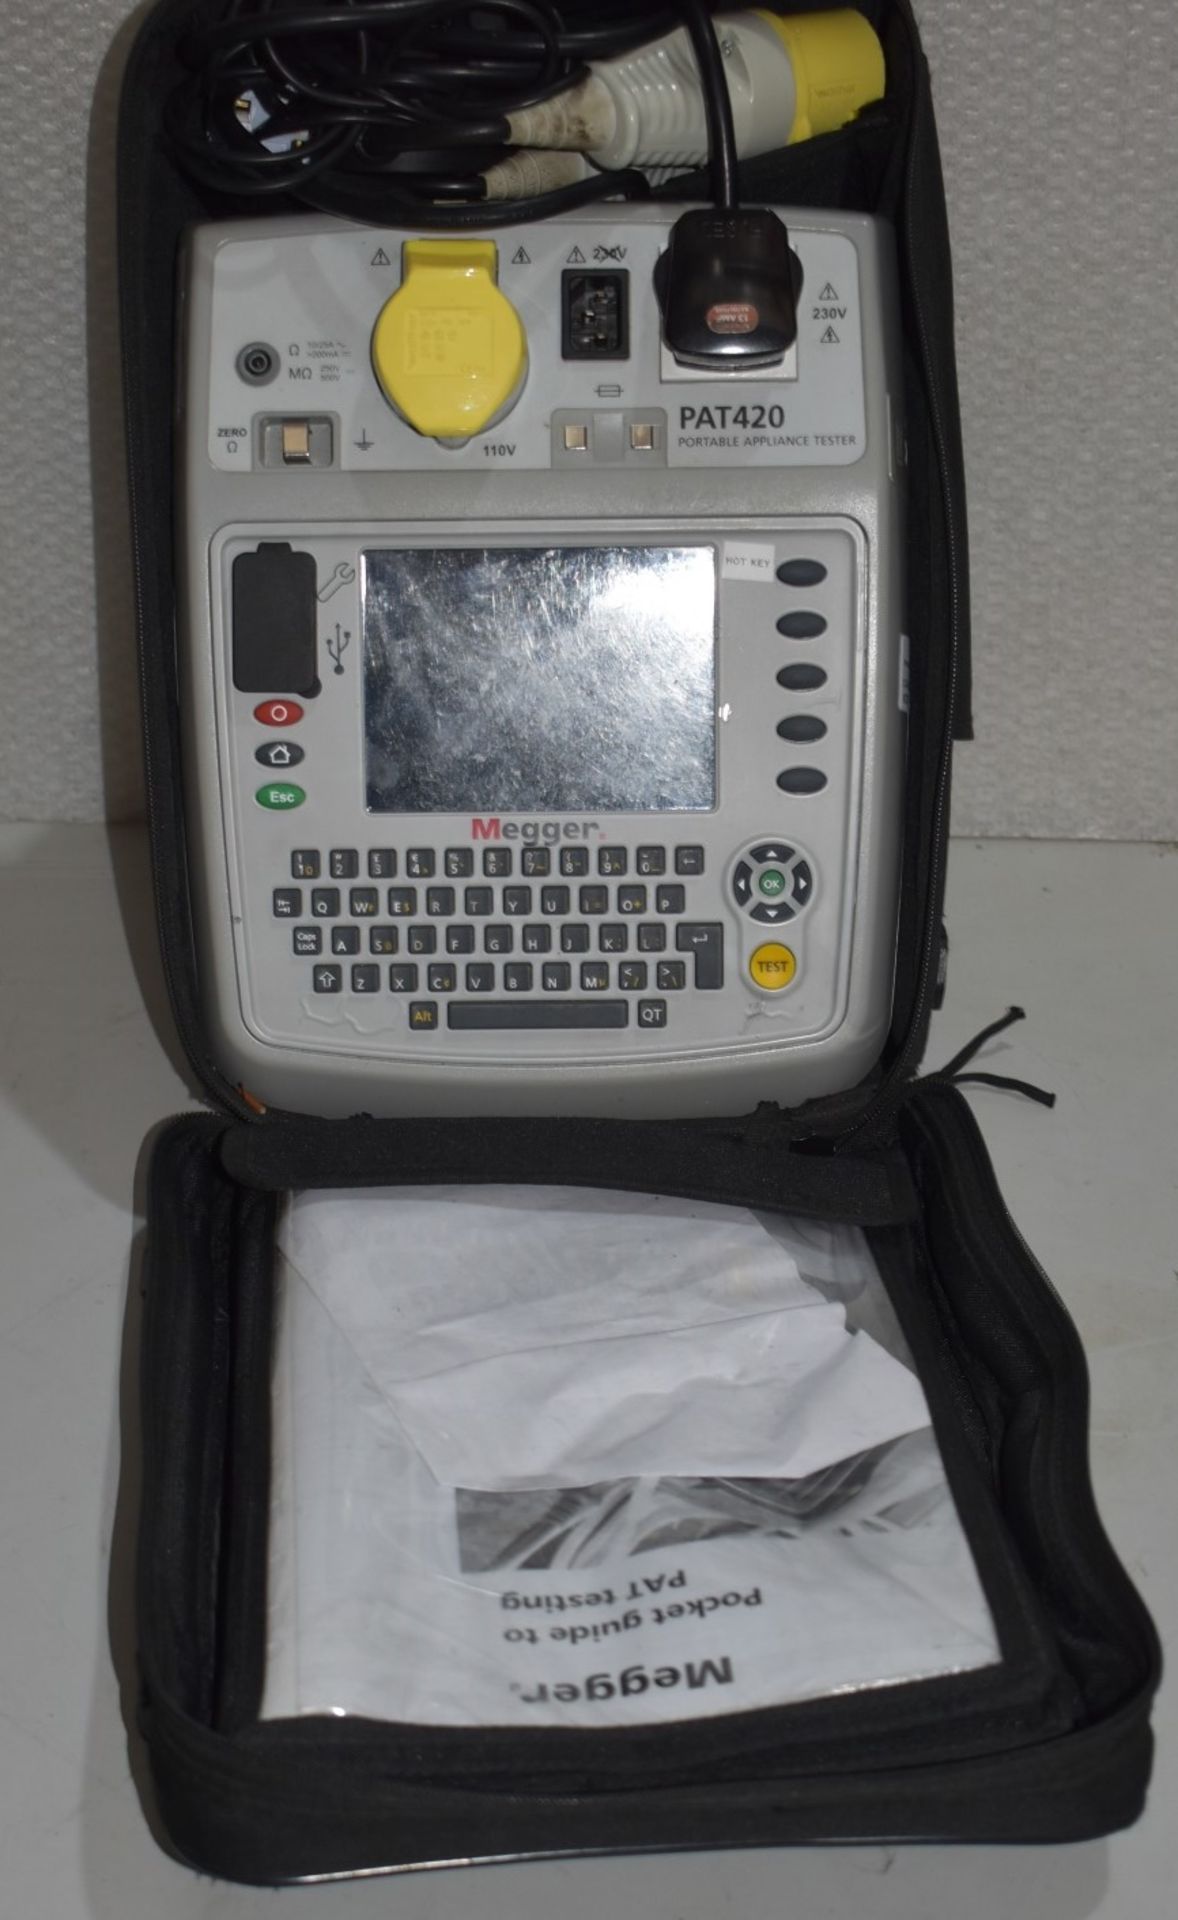 1 x MEGGER PAT420 Portable Appliance Tester- Original RRP £1,620.00 - Includes Power Lead, Pocket - Image 3 of 6